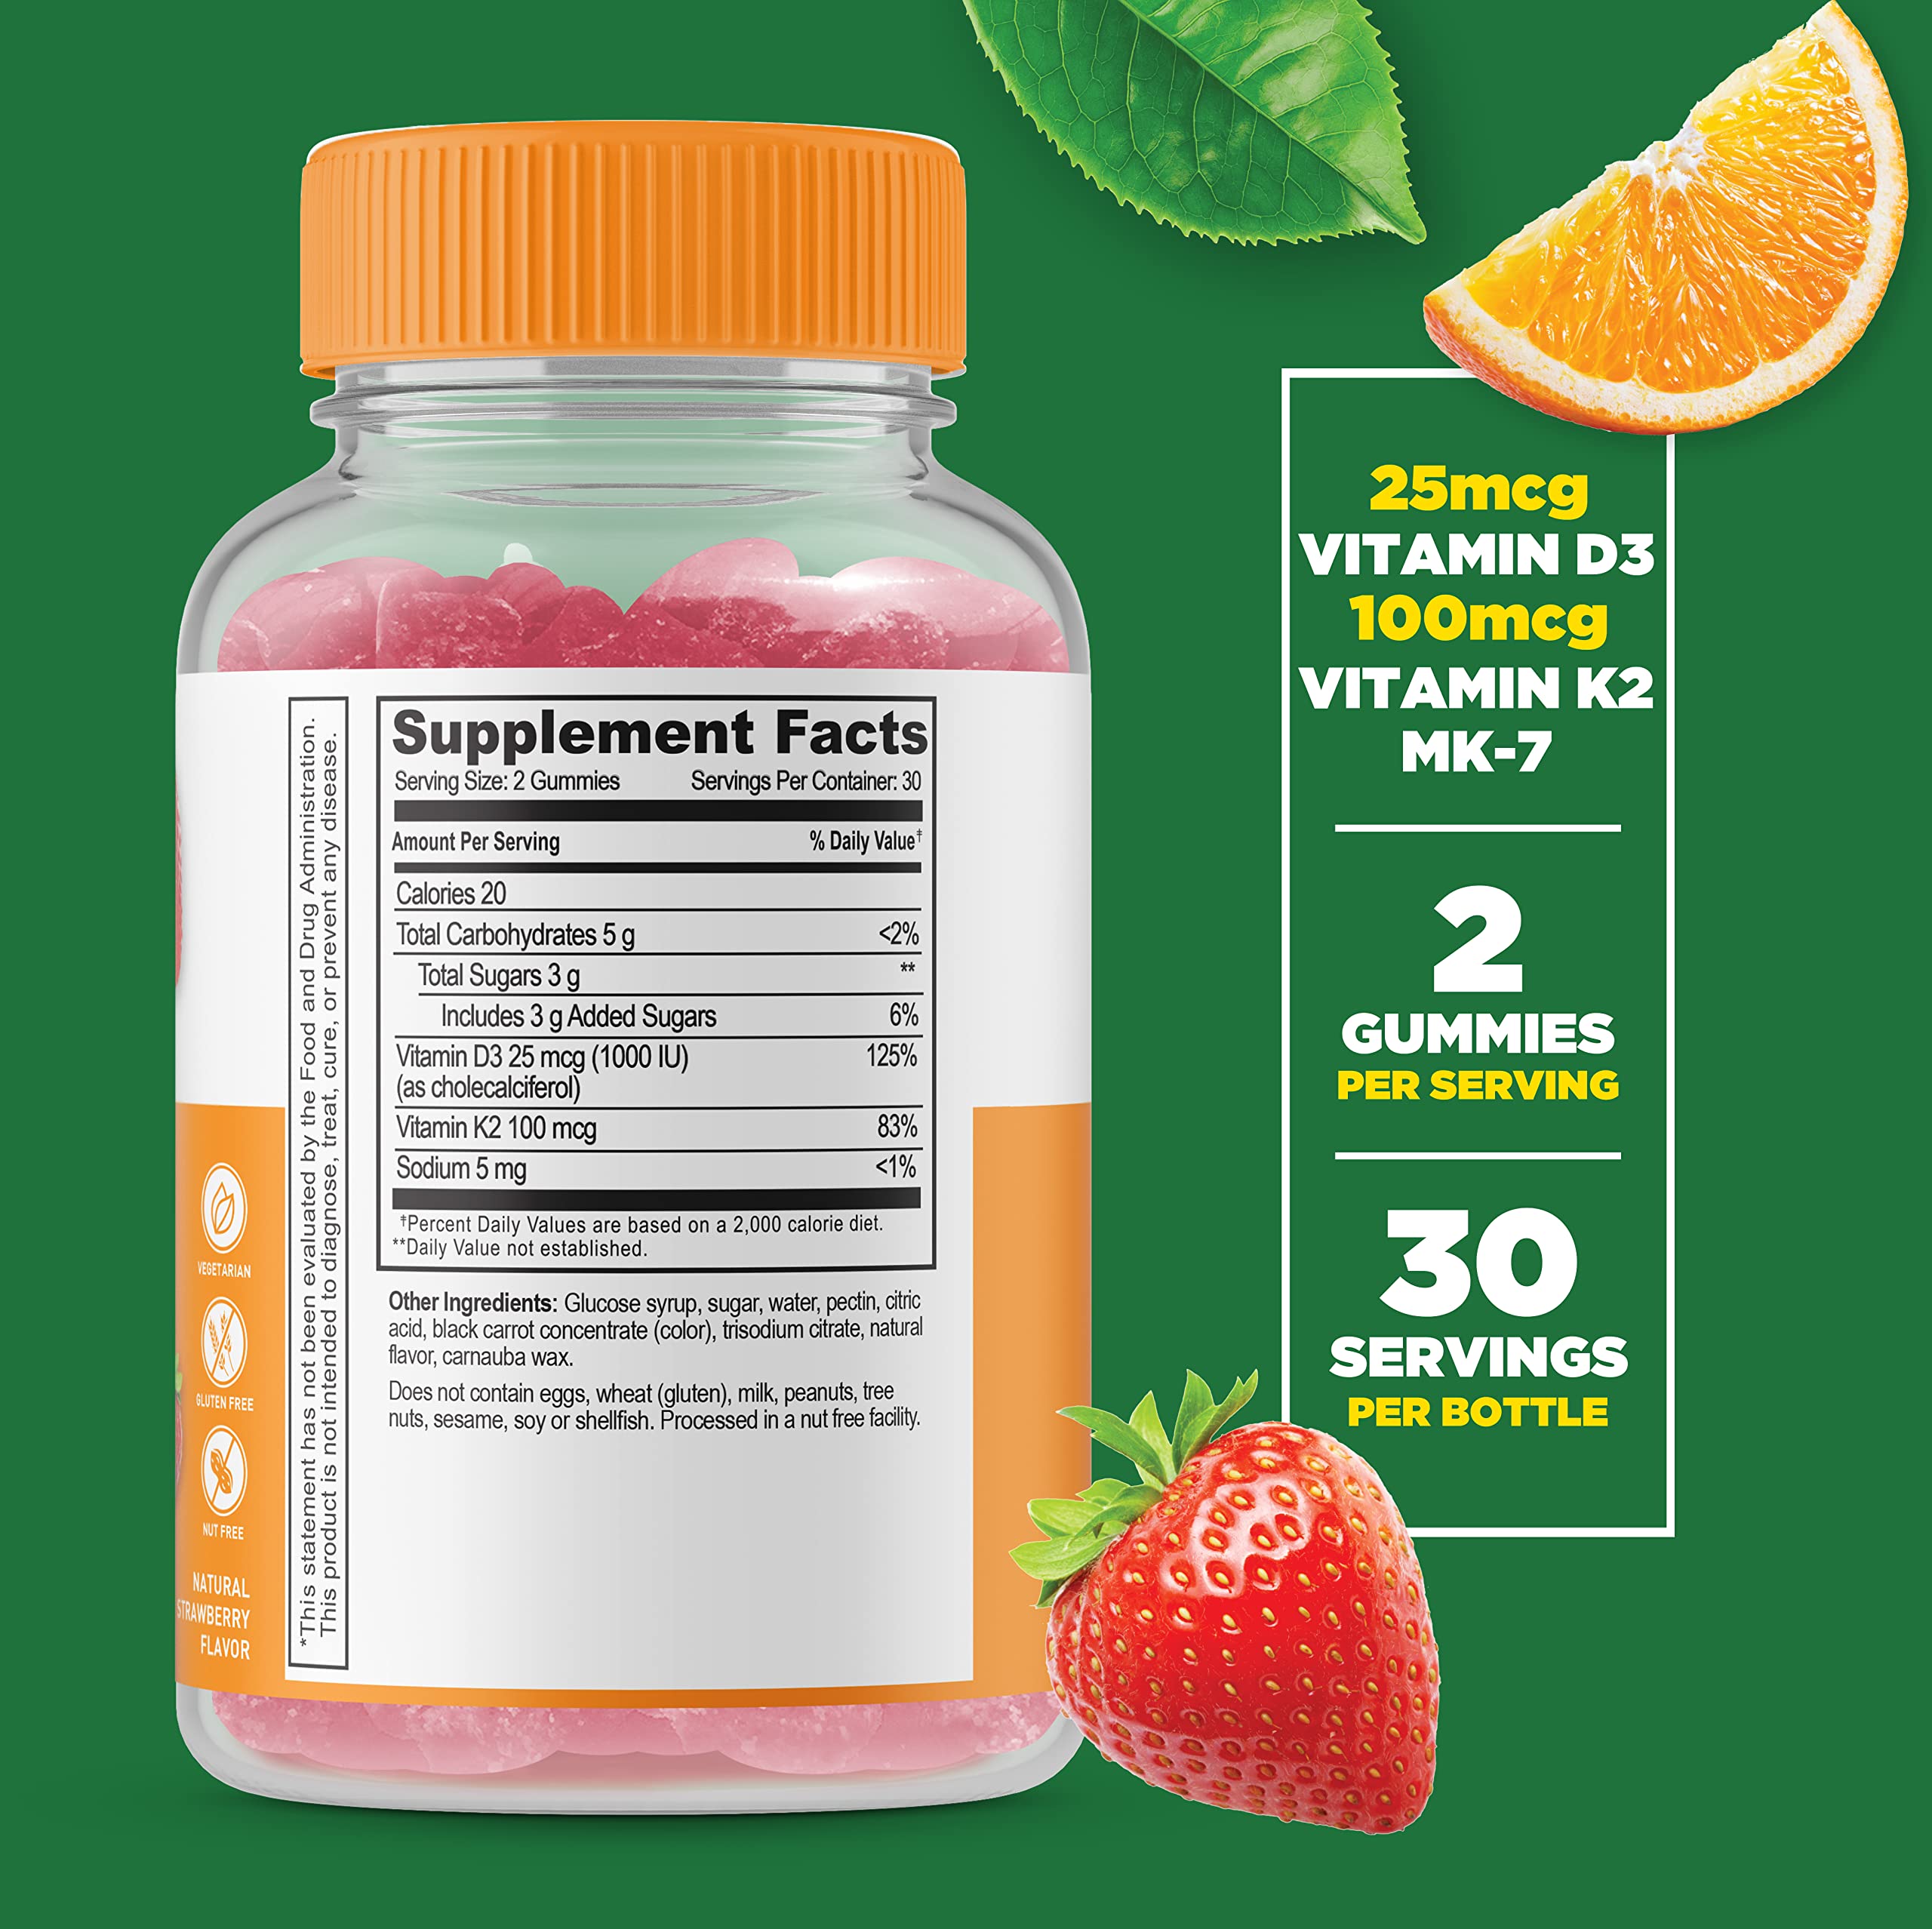 Lifeable Vitamin D3 + Vitamin K2 + Vitamin D 10000 IU, Gummies Bundle - Great Tasting, Vitamin Supplement, Gluten Free, GMO Free, Chewable Gummy